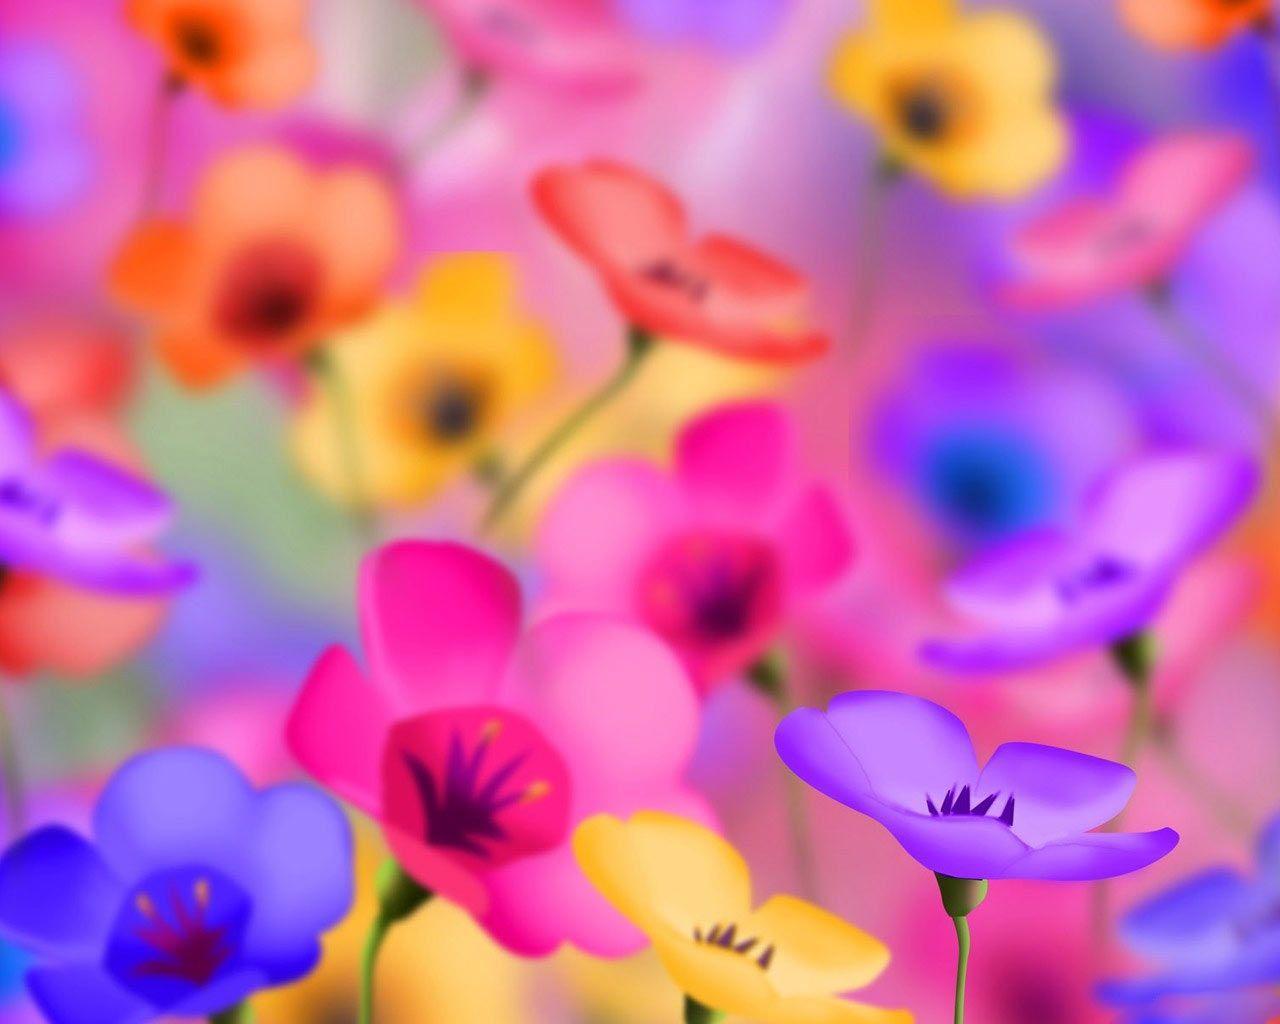 Pretty Colorful Flowers 307052 Image HD Wallpaper. Wallfoy